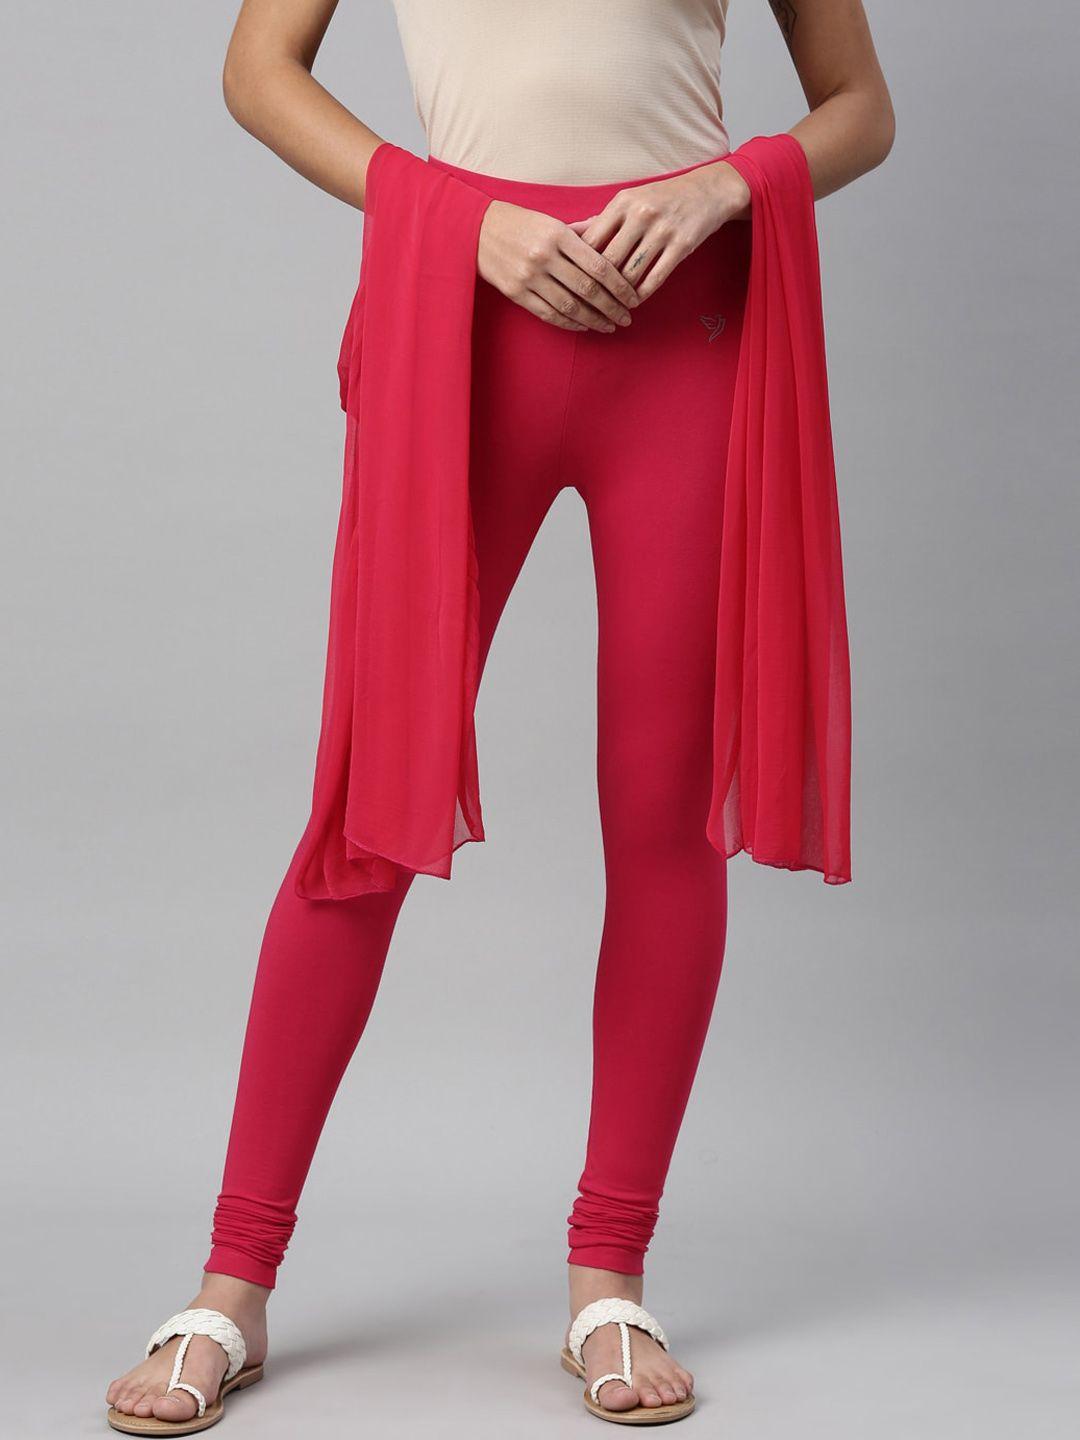 twin birds women pink solid churidar-length leggings with matching shawl